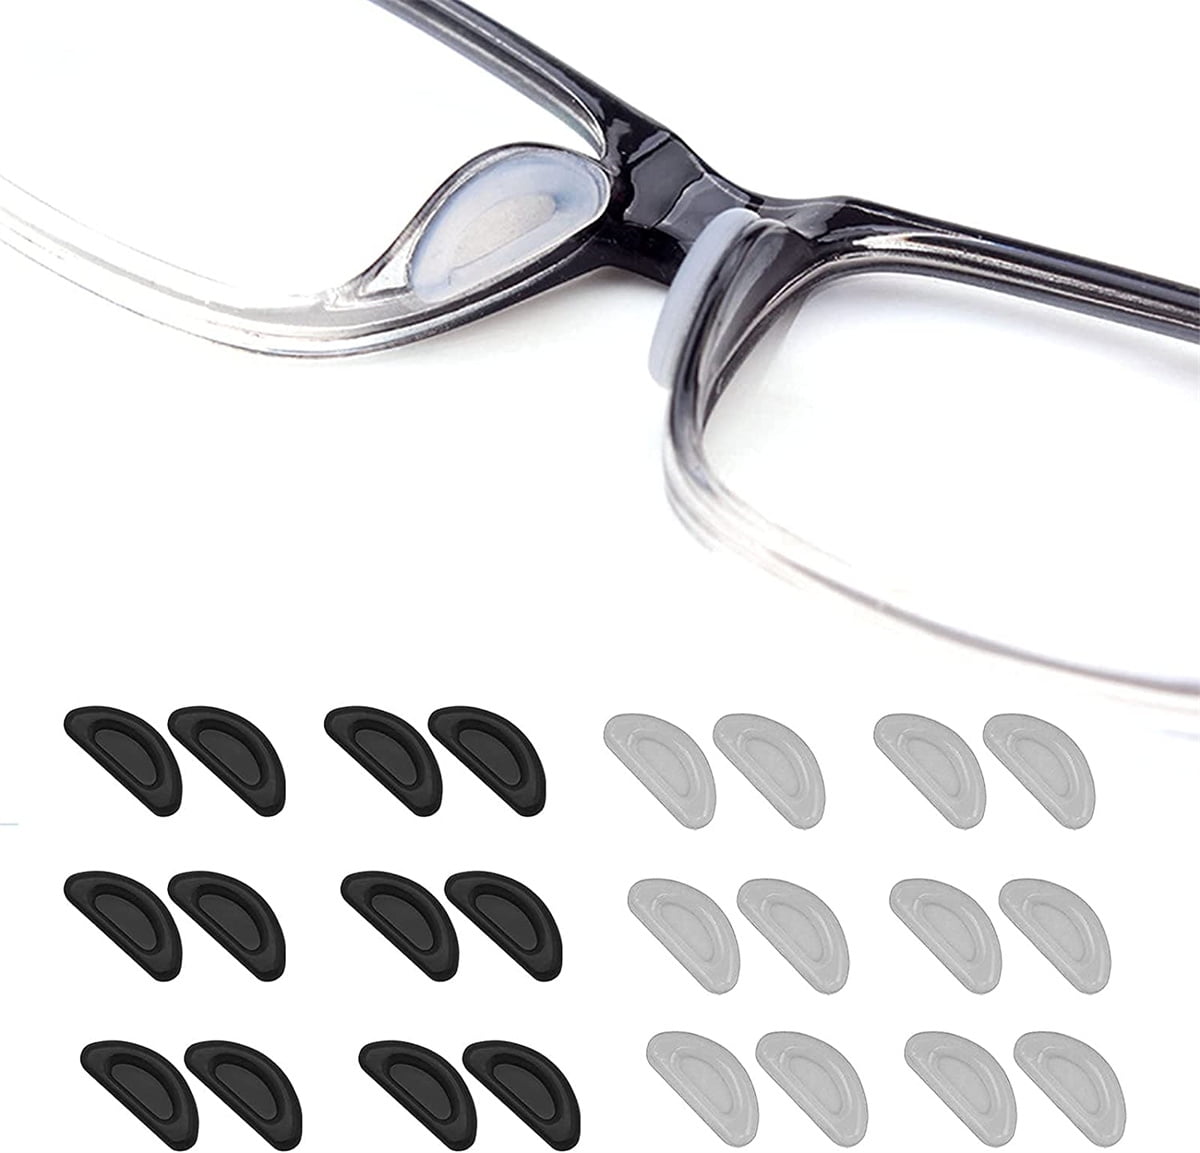 Anti-Slip Adhesive Nose Pads for Glasses, Upgrade Model Air